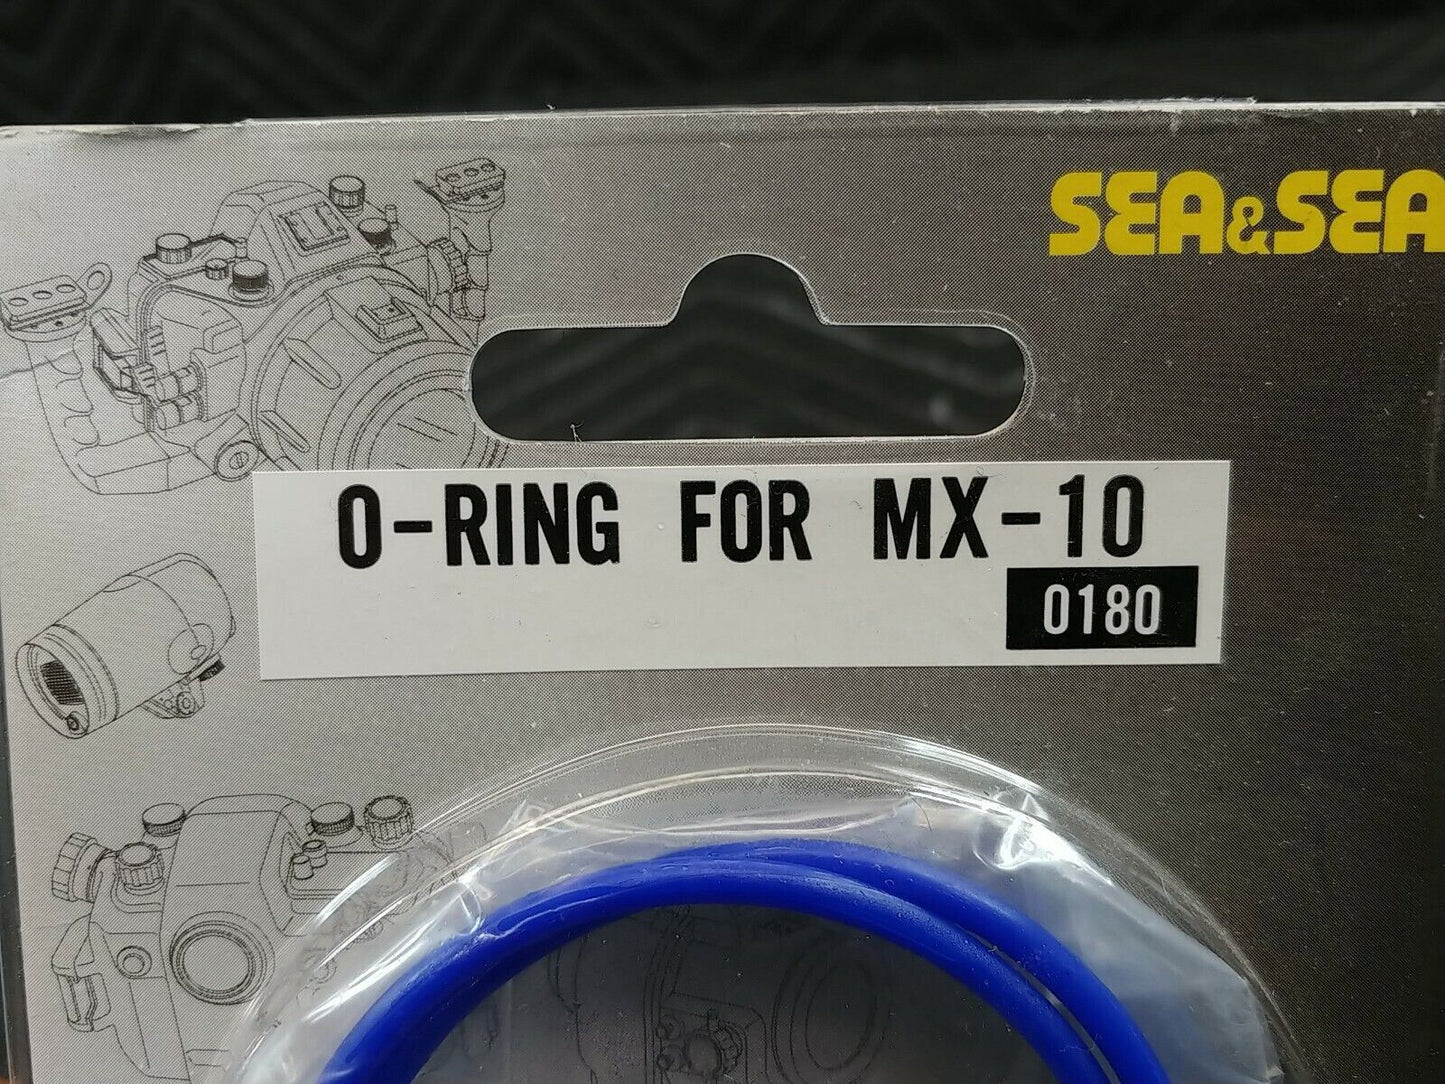 Sea & Sea Underwater Camera O-Ring Set for MX-10